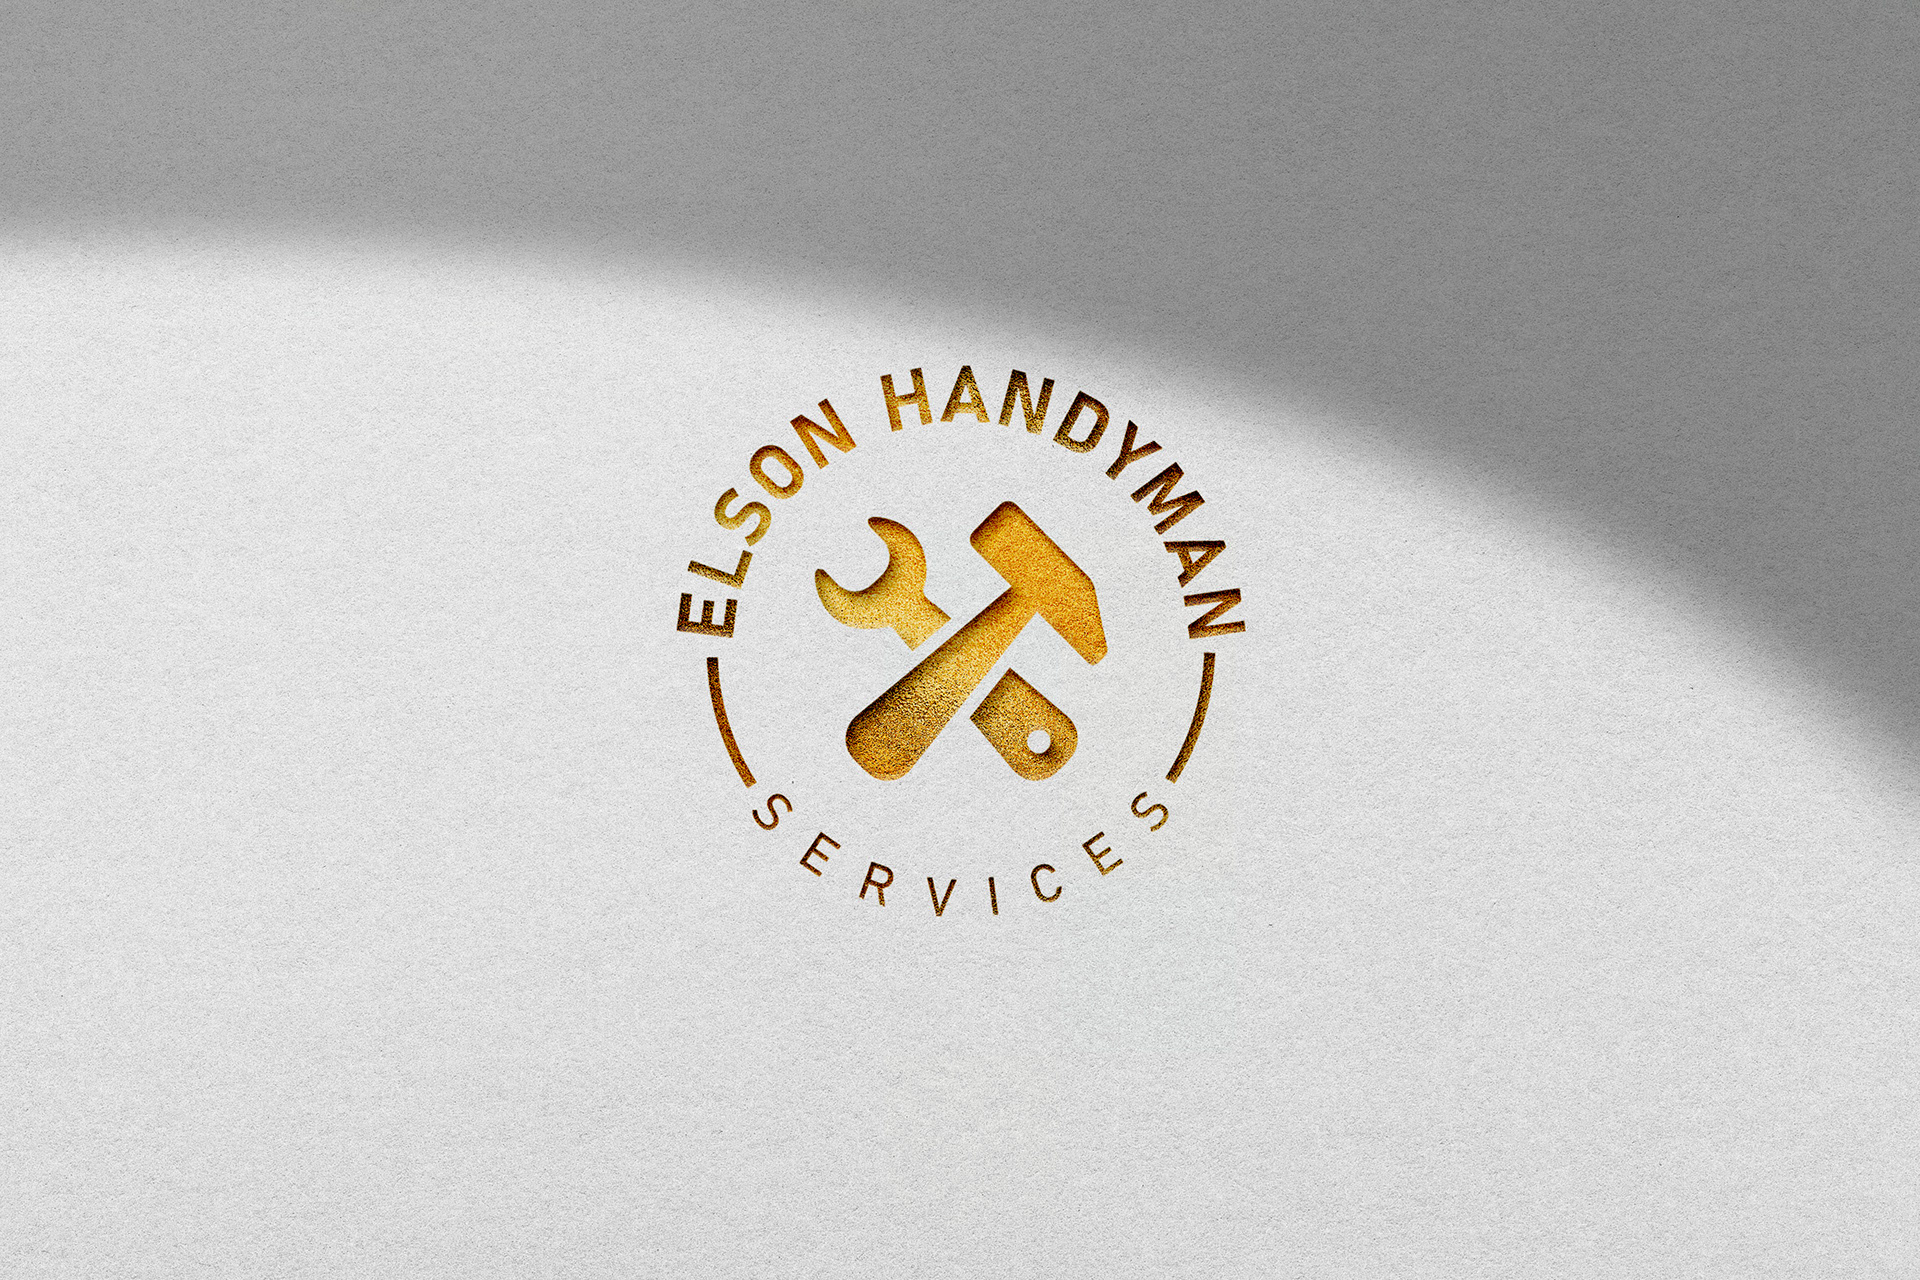 Handyman Logo Design